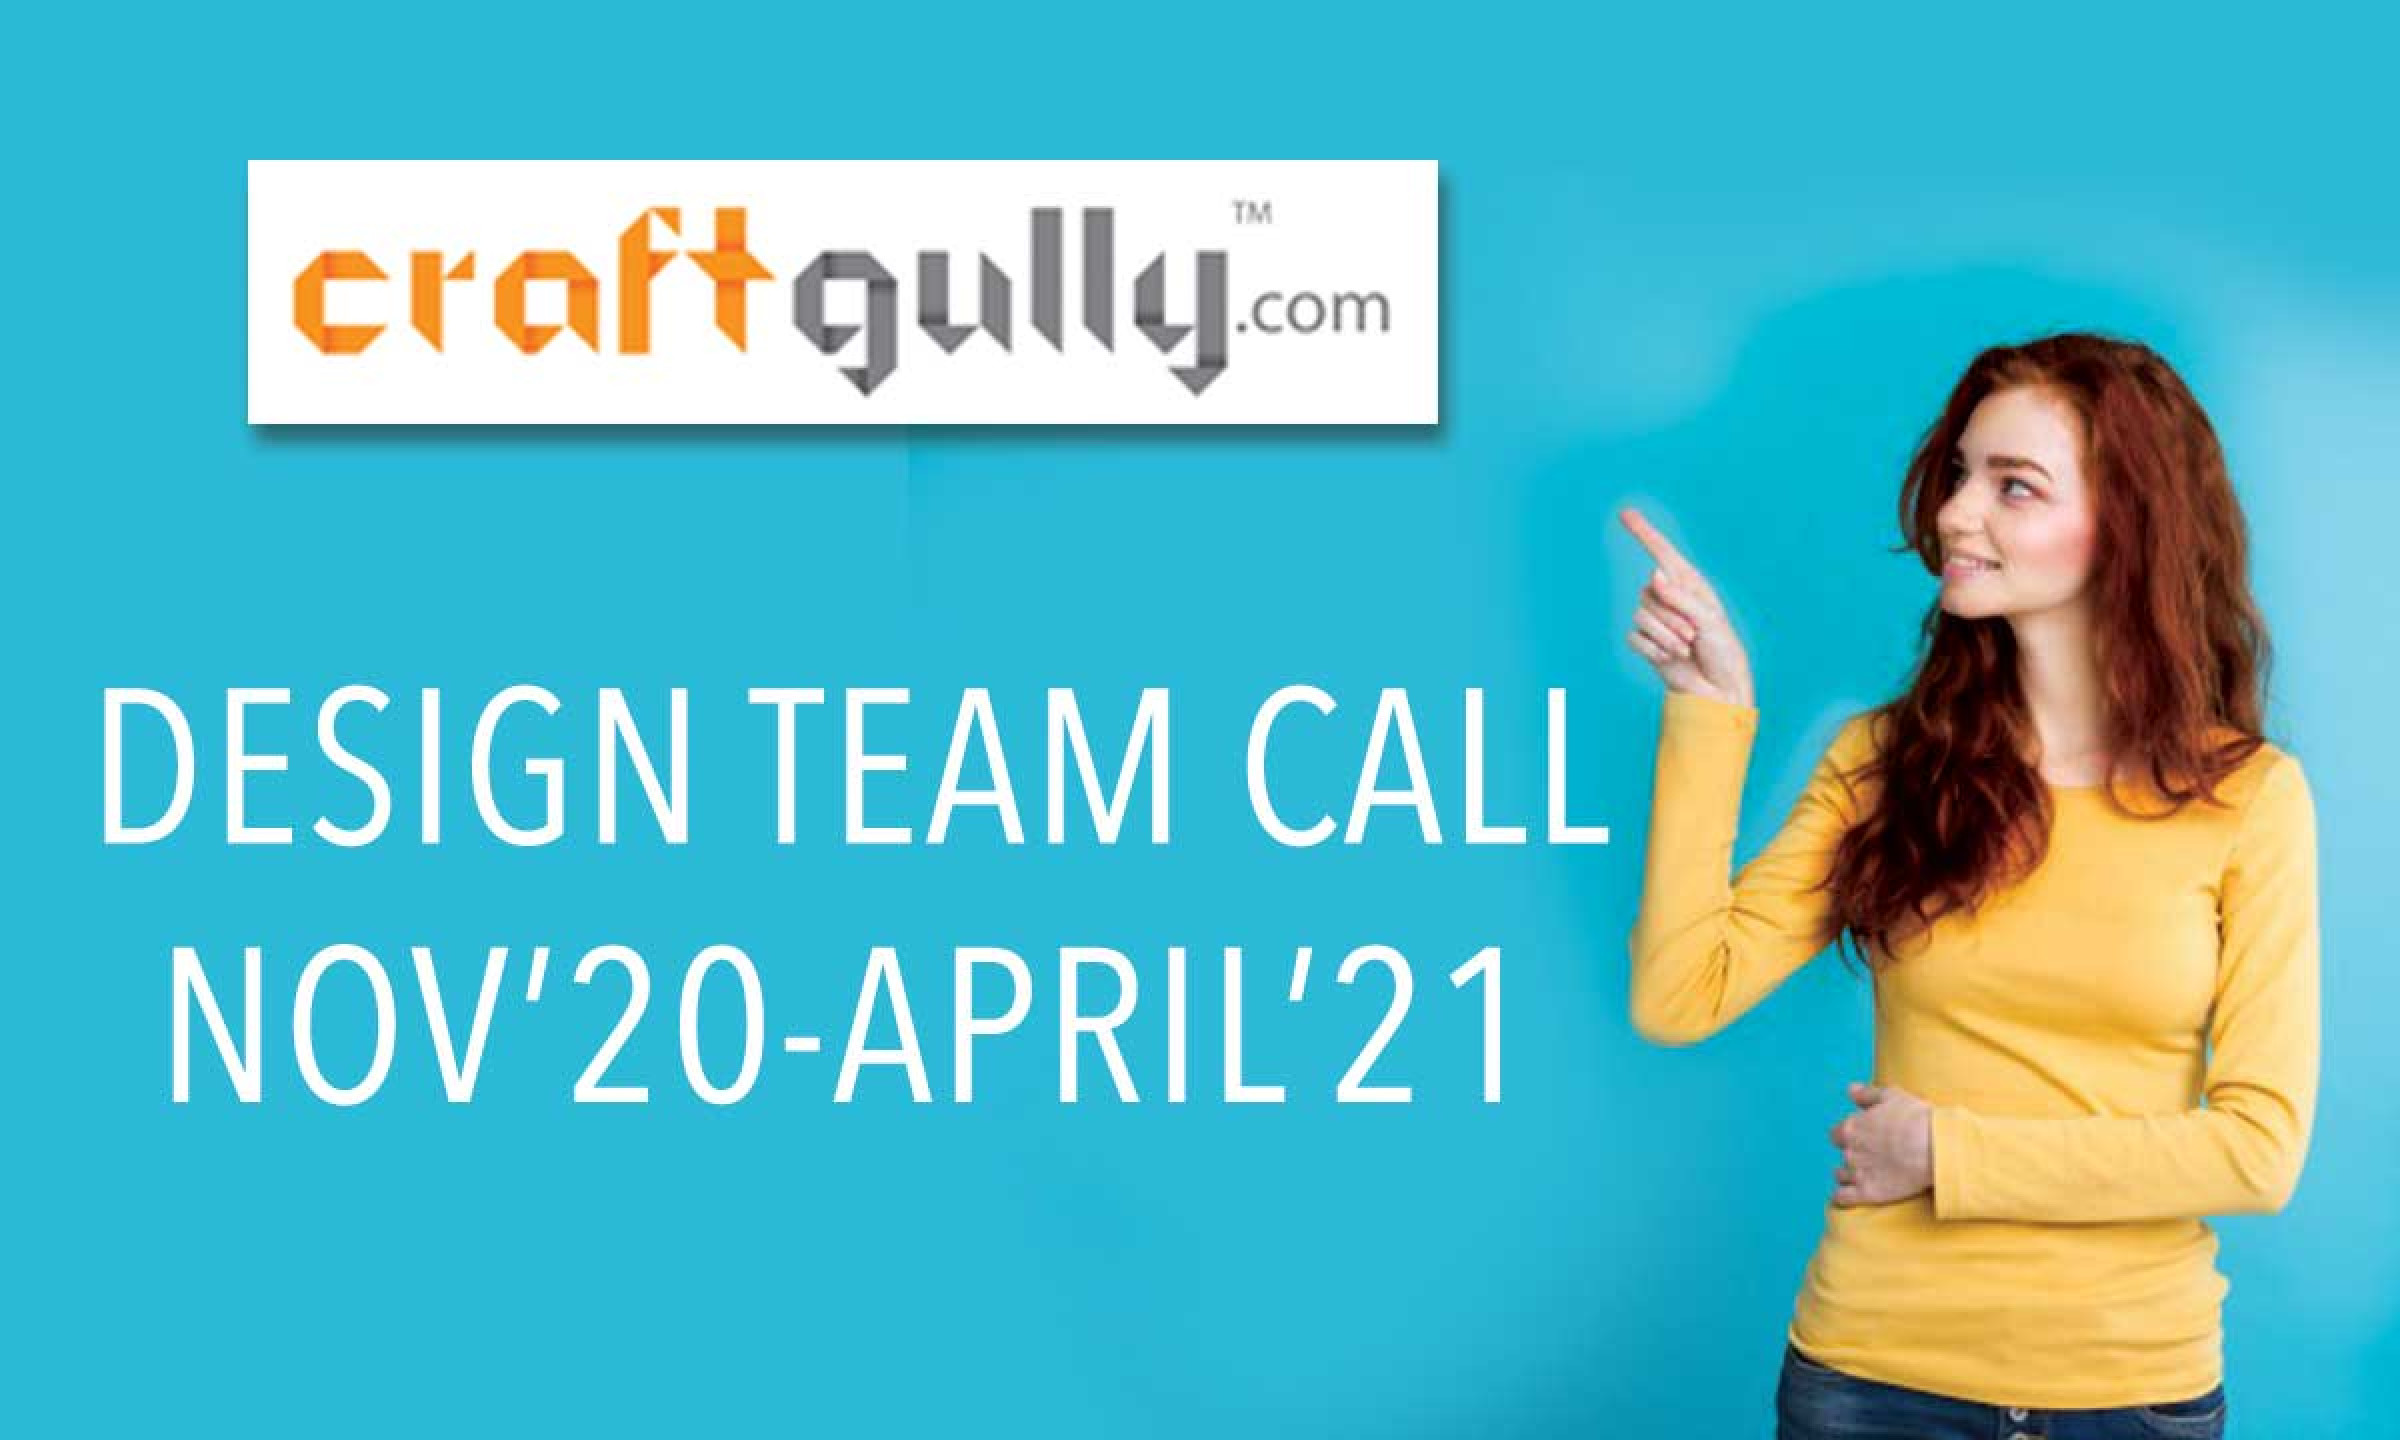 CraftGully Design Team Call November 2020 April 2021